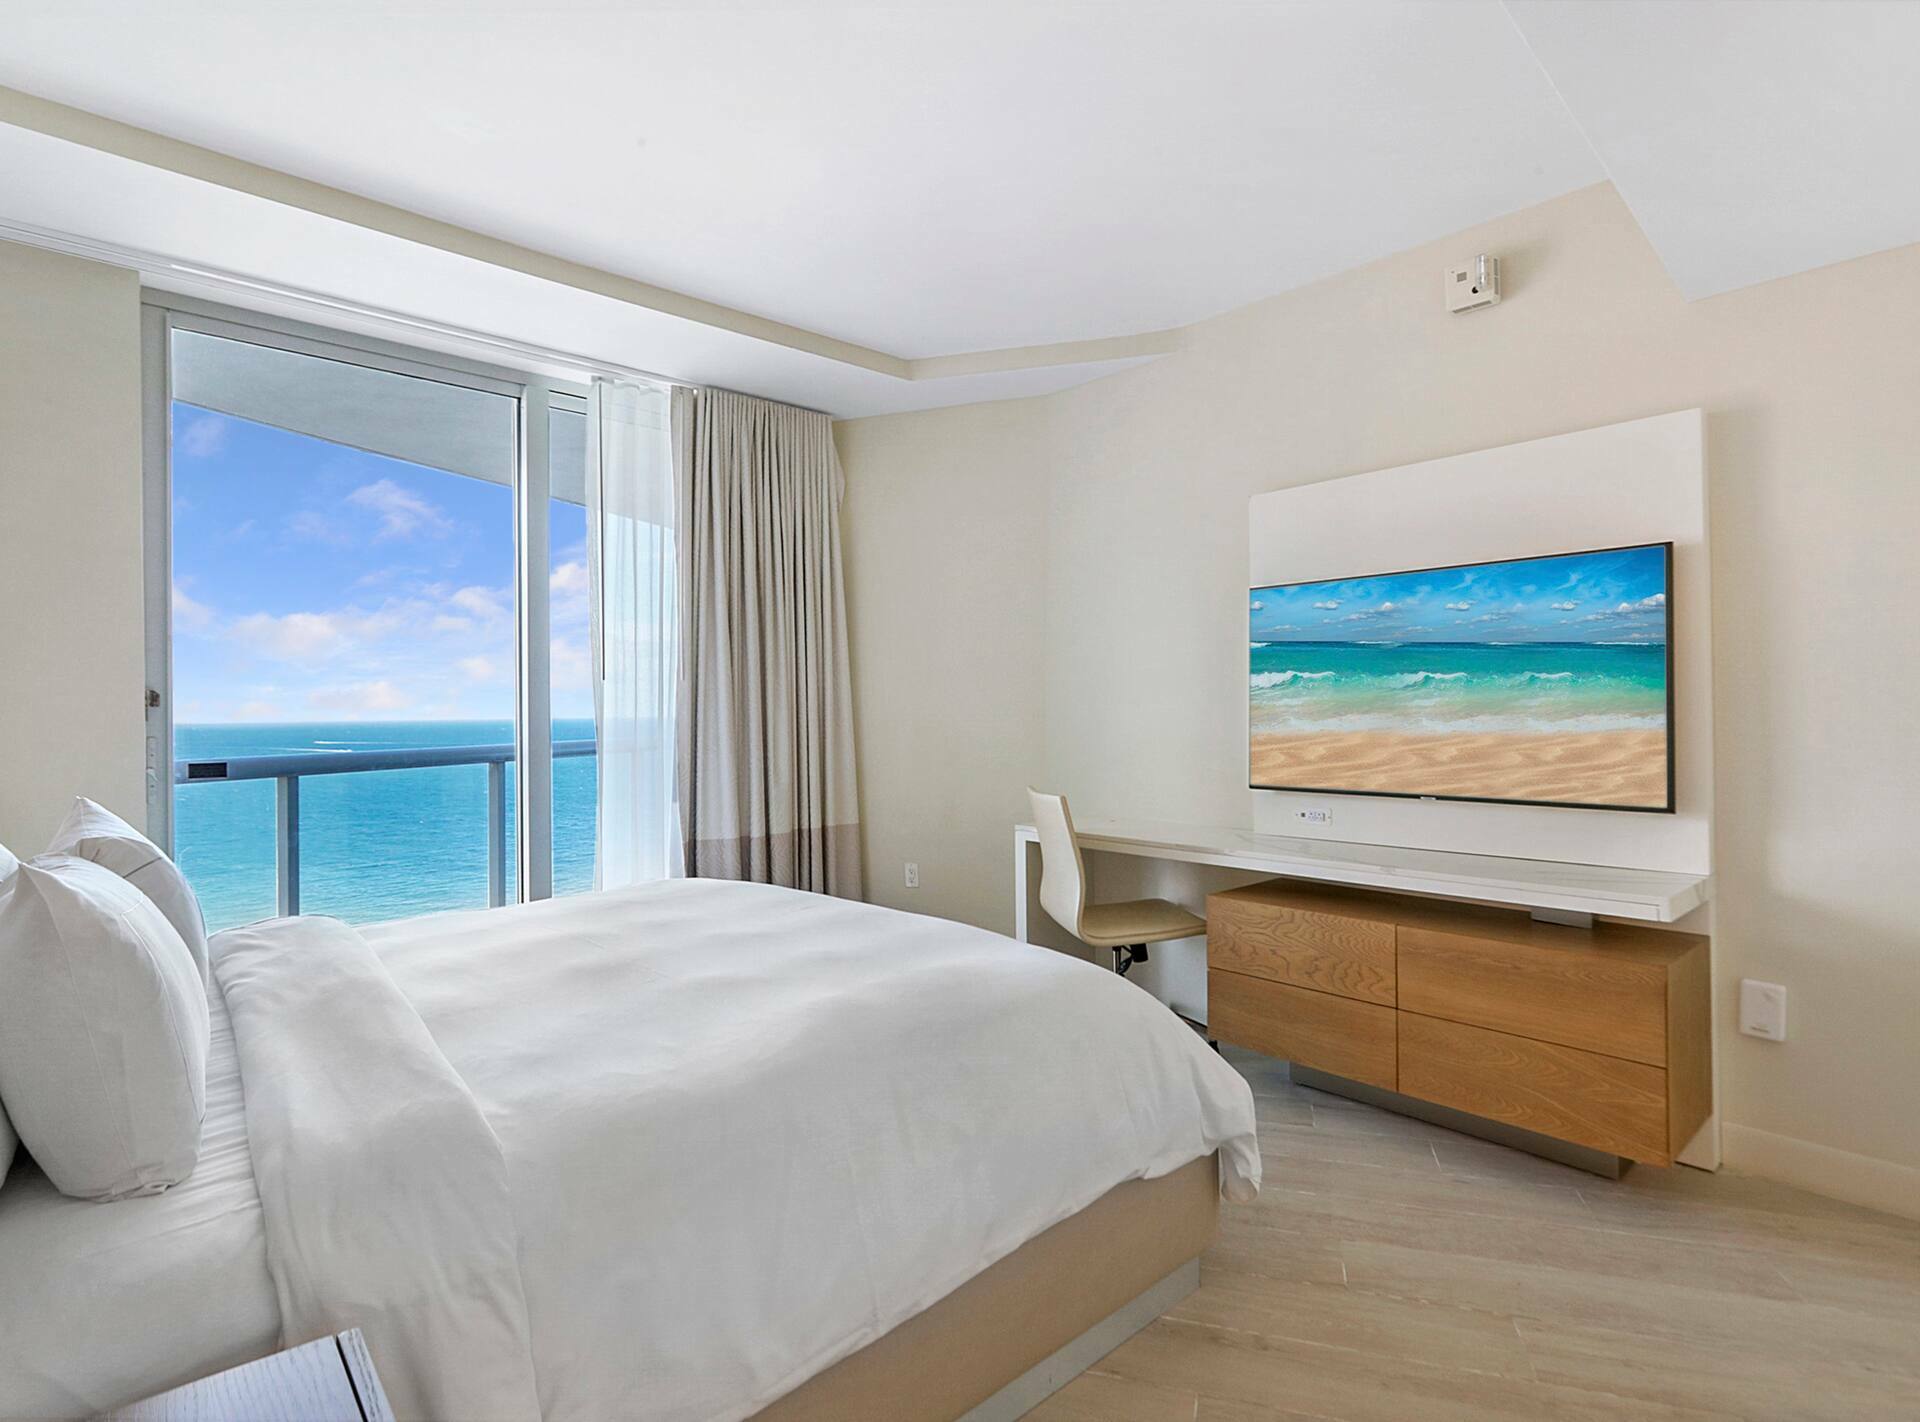 Photo of Hilton Fort Lauderdale Beach Resort, Fort Lauderdale, FL